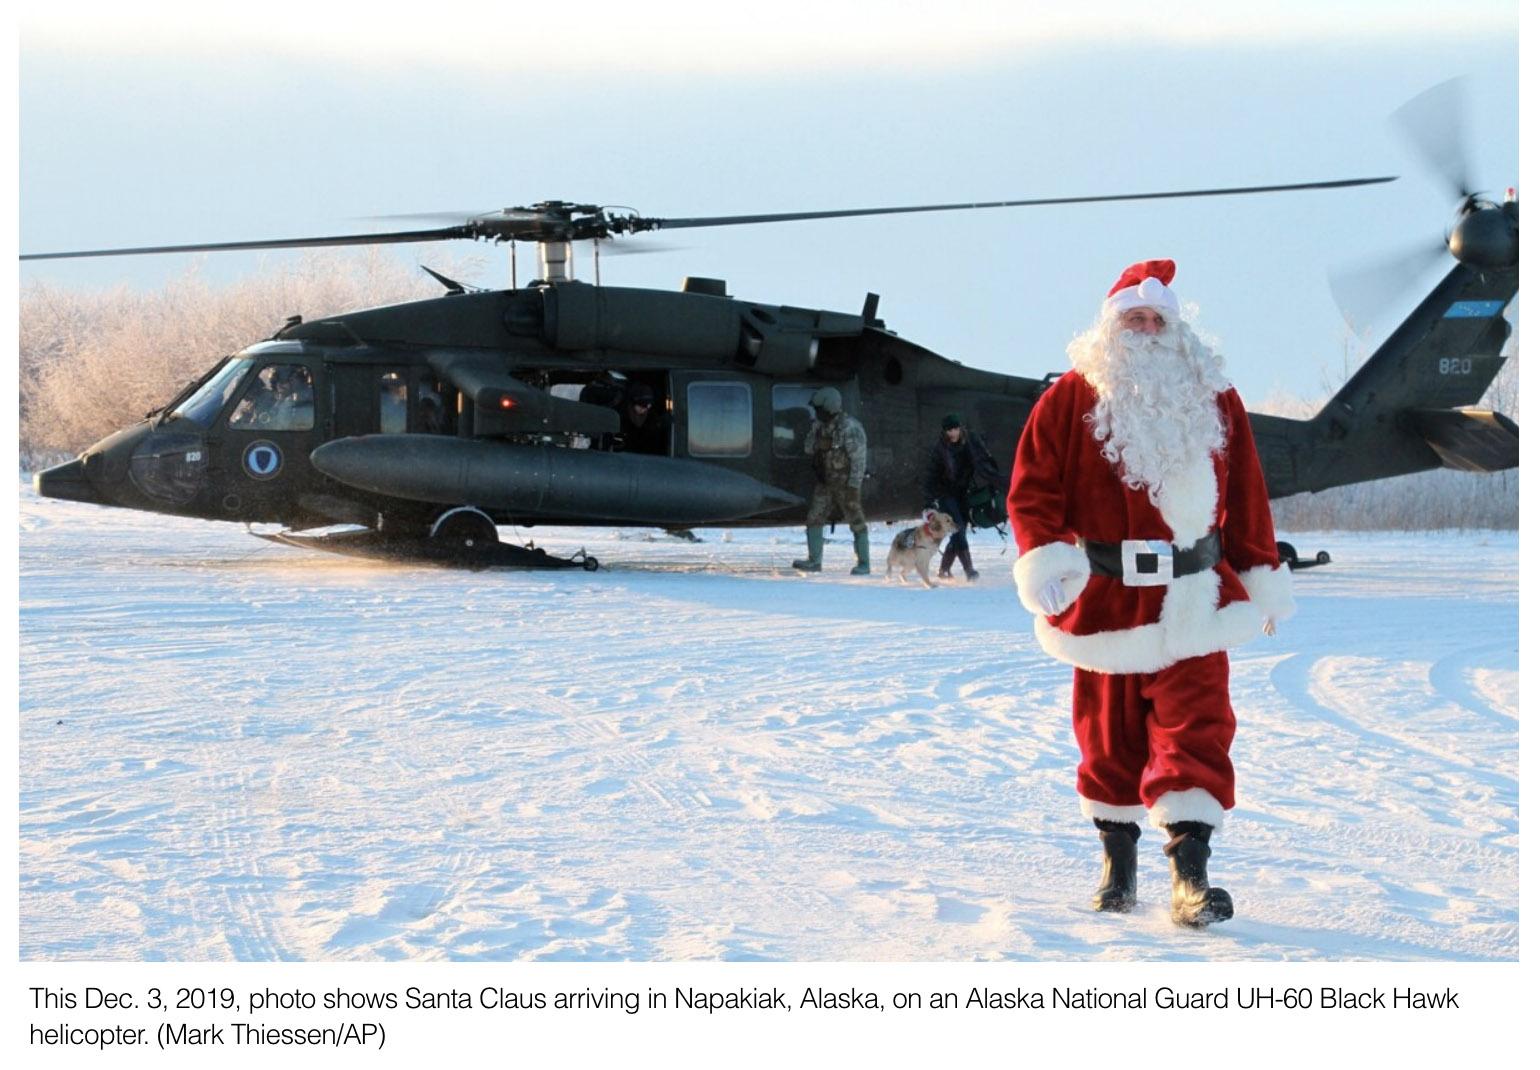  Santa, soldiers bring joy to beleaguered Alaska village